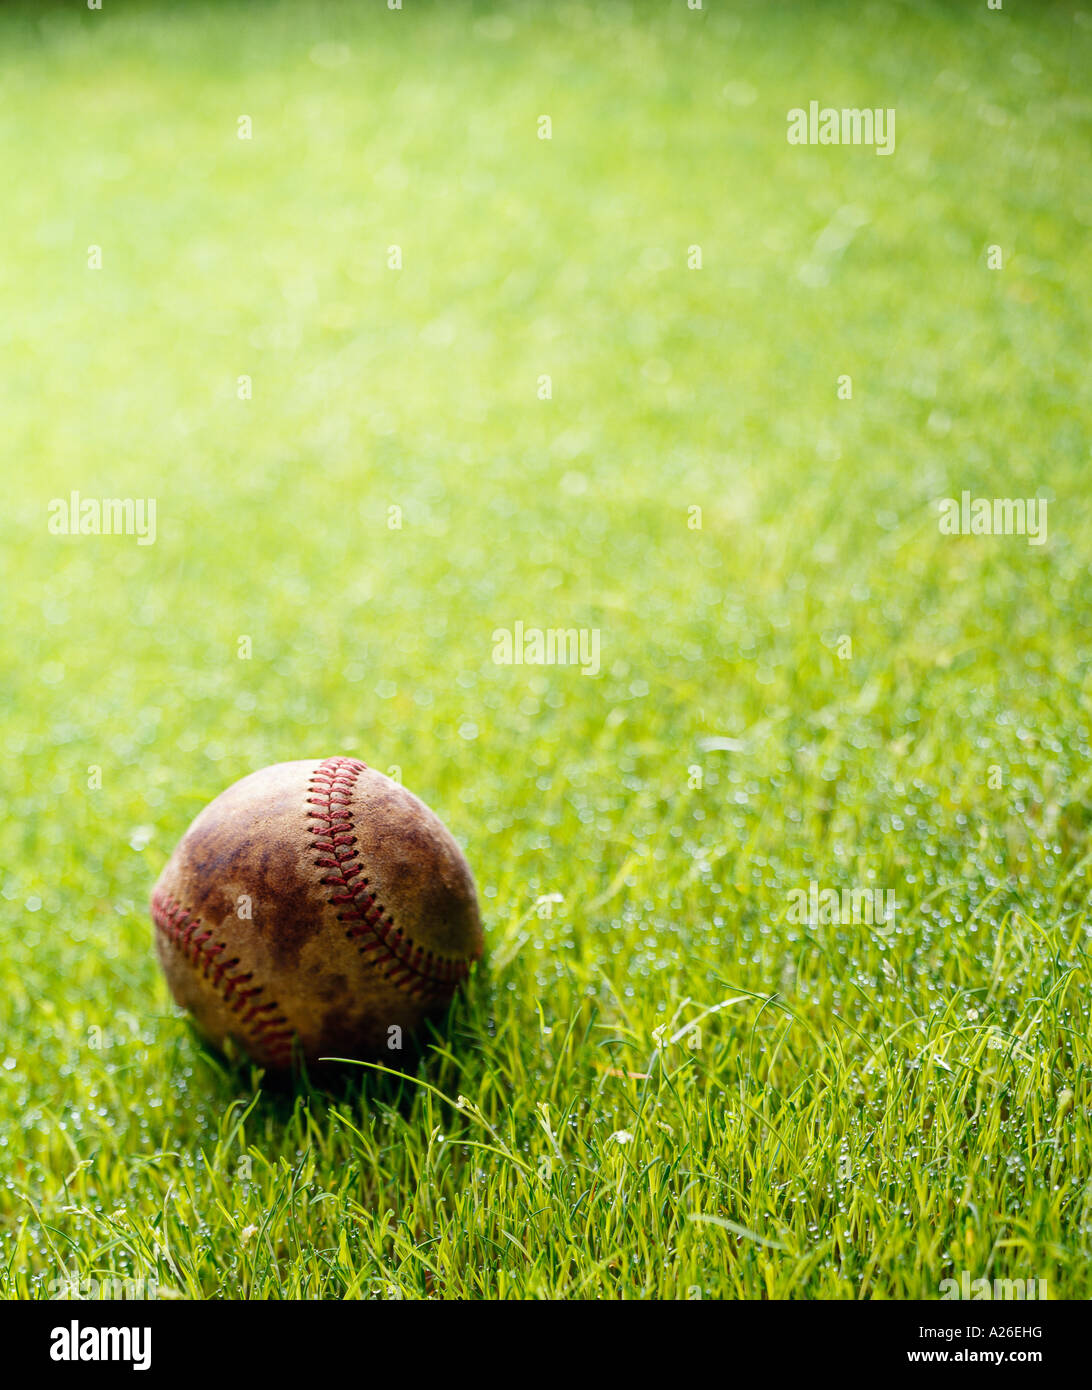 baseball in grass Stock Photo